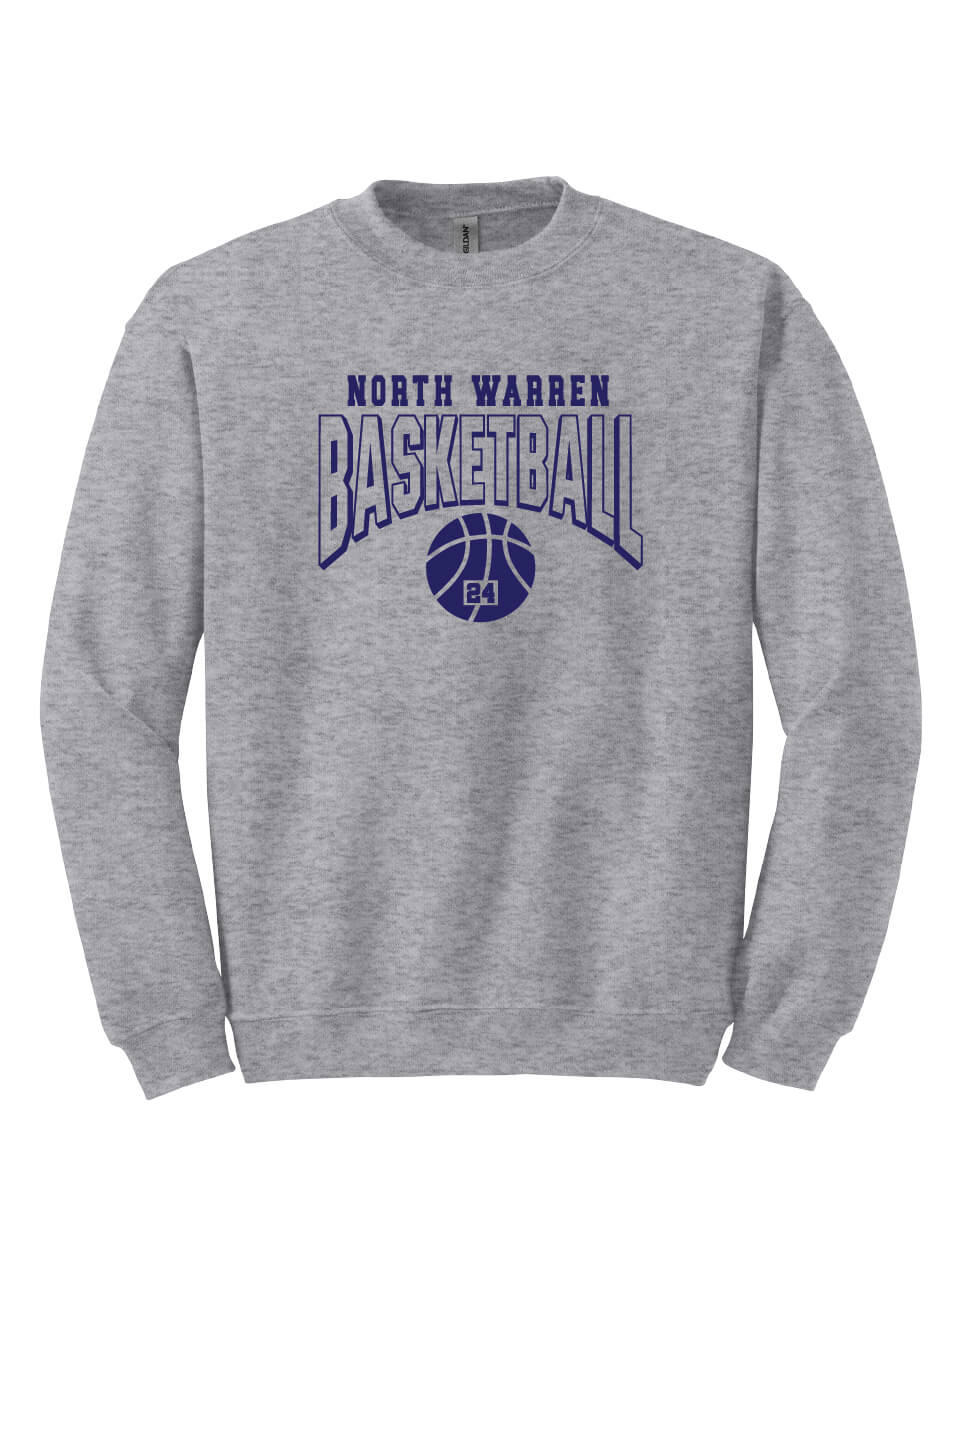 Basketball Crewneck Sweatshirt (Youth) gray